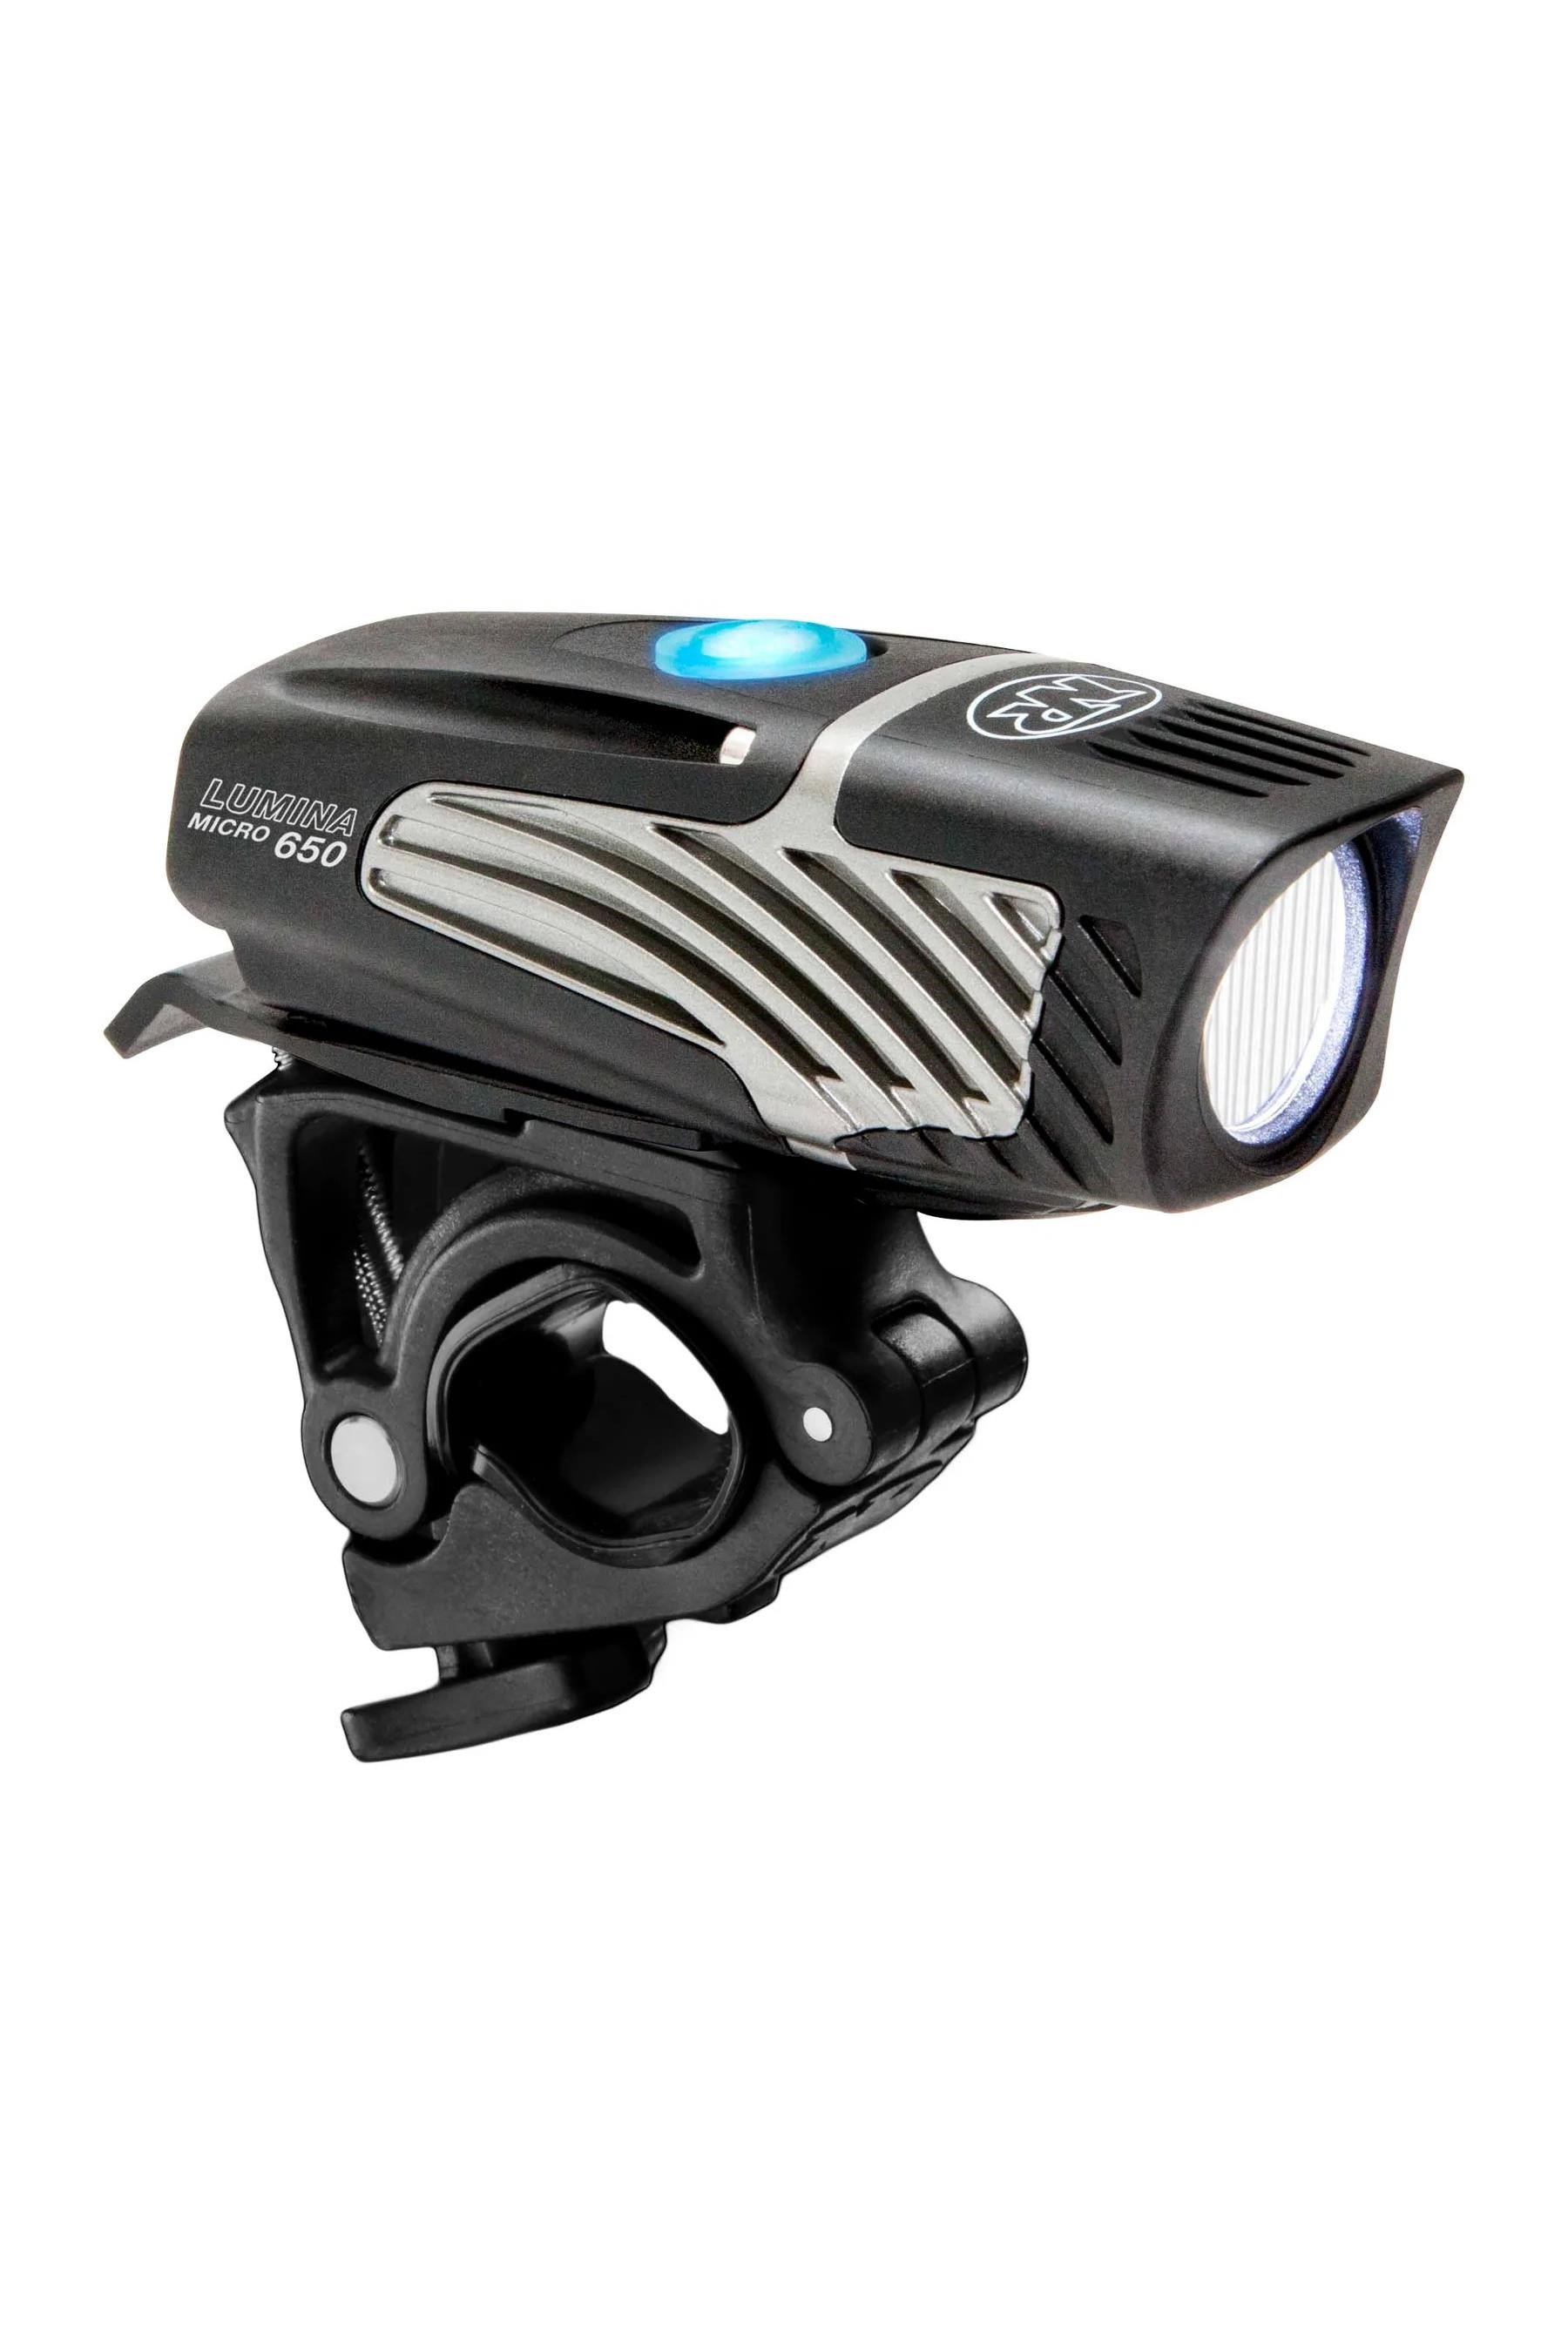 Lumina Micro 650 Front Bike Light -